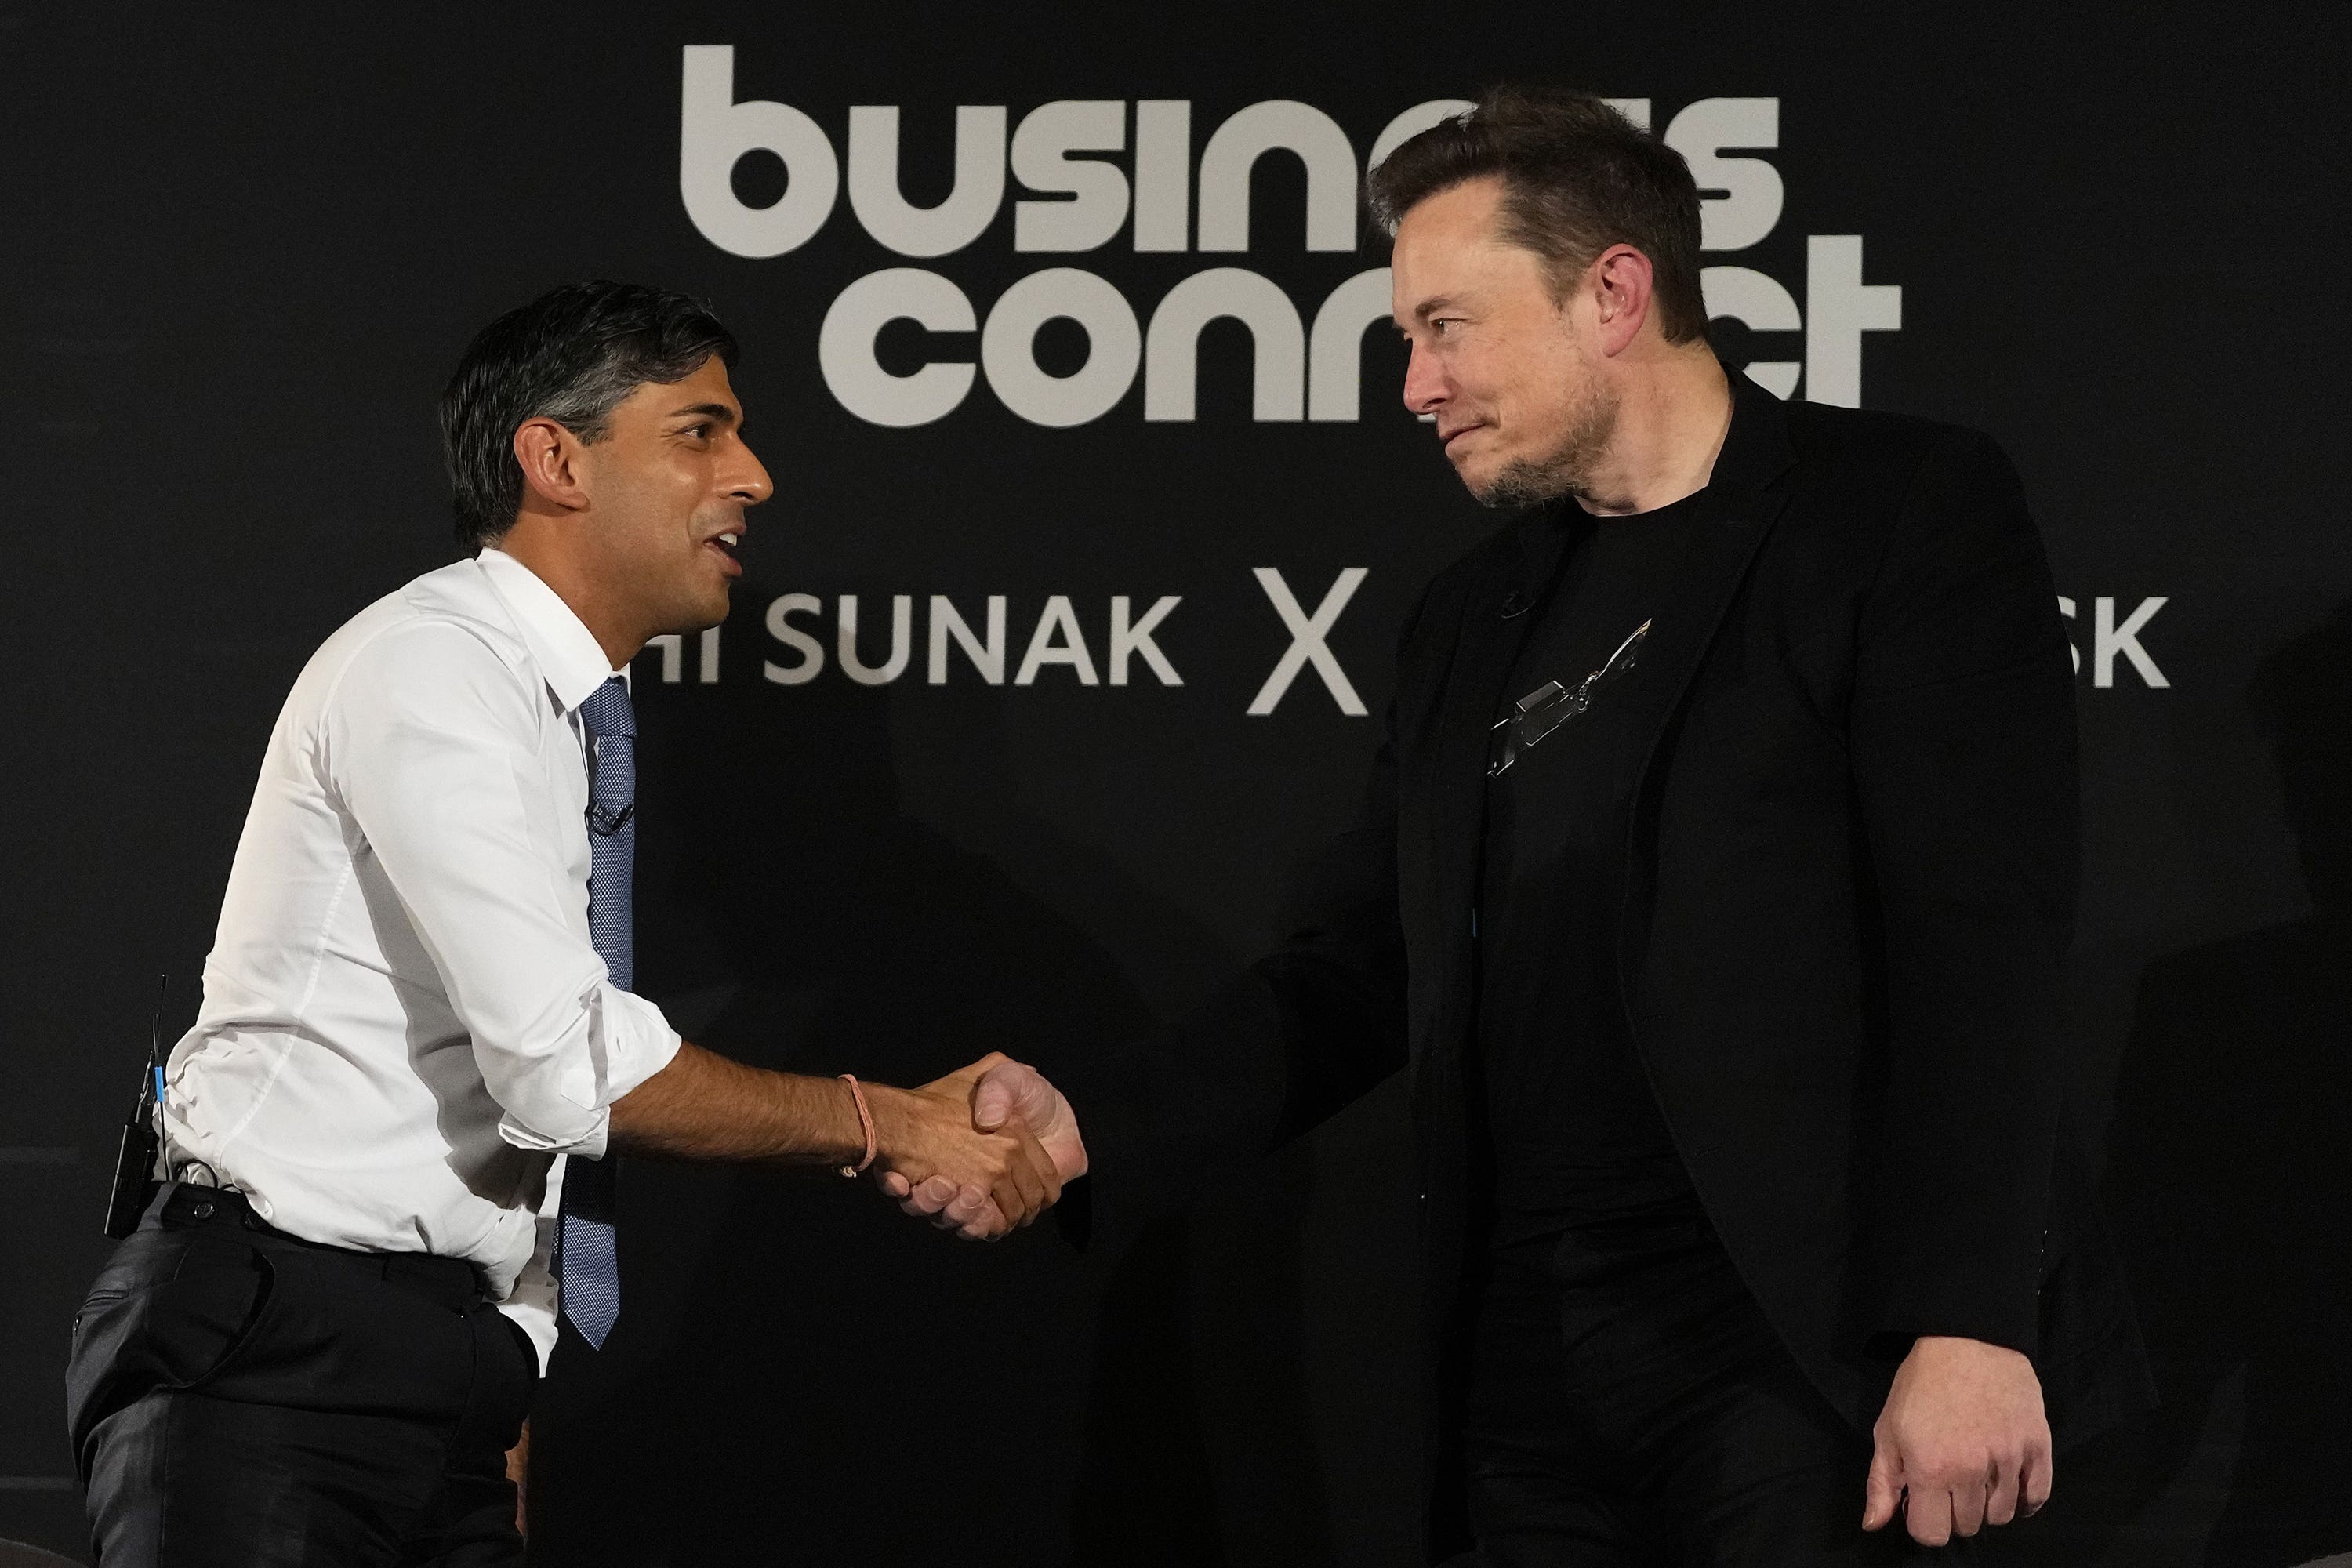 Prime Minister Rishi Sunak shakes hands with Elon Musk